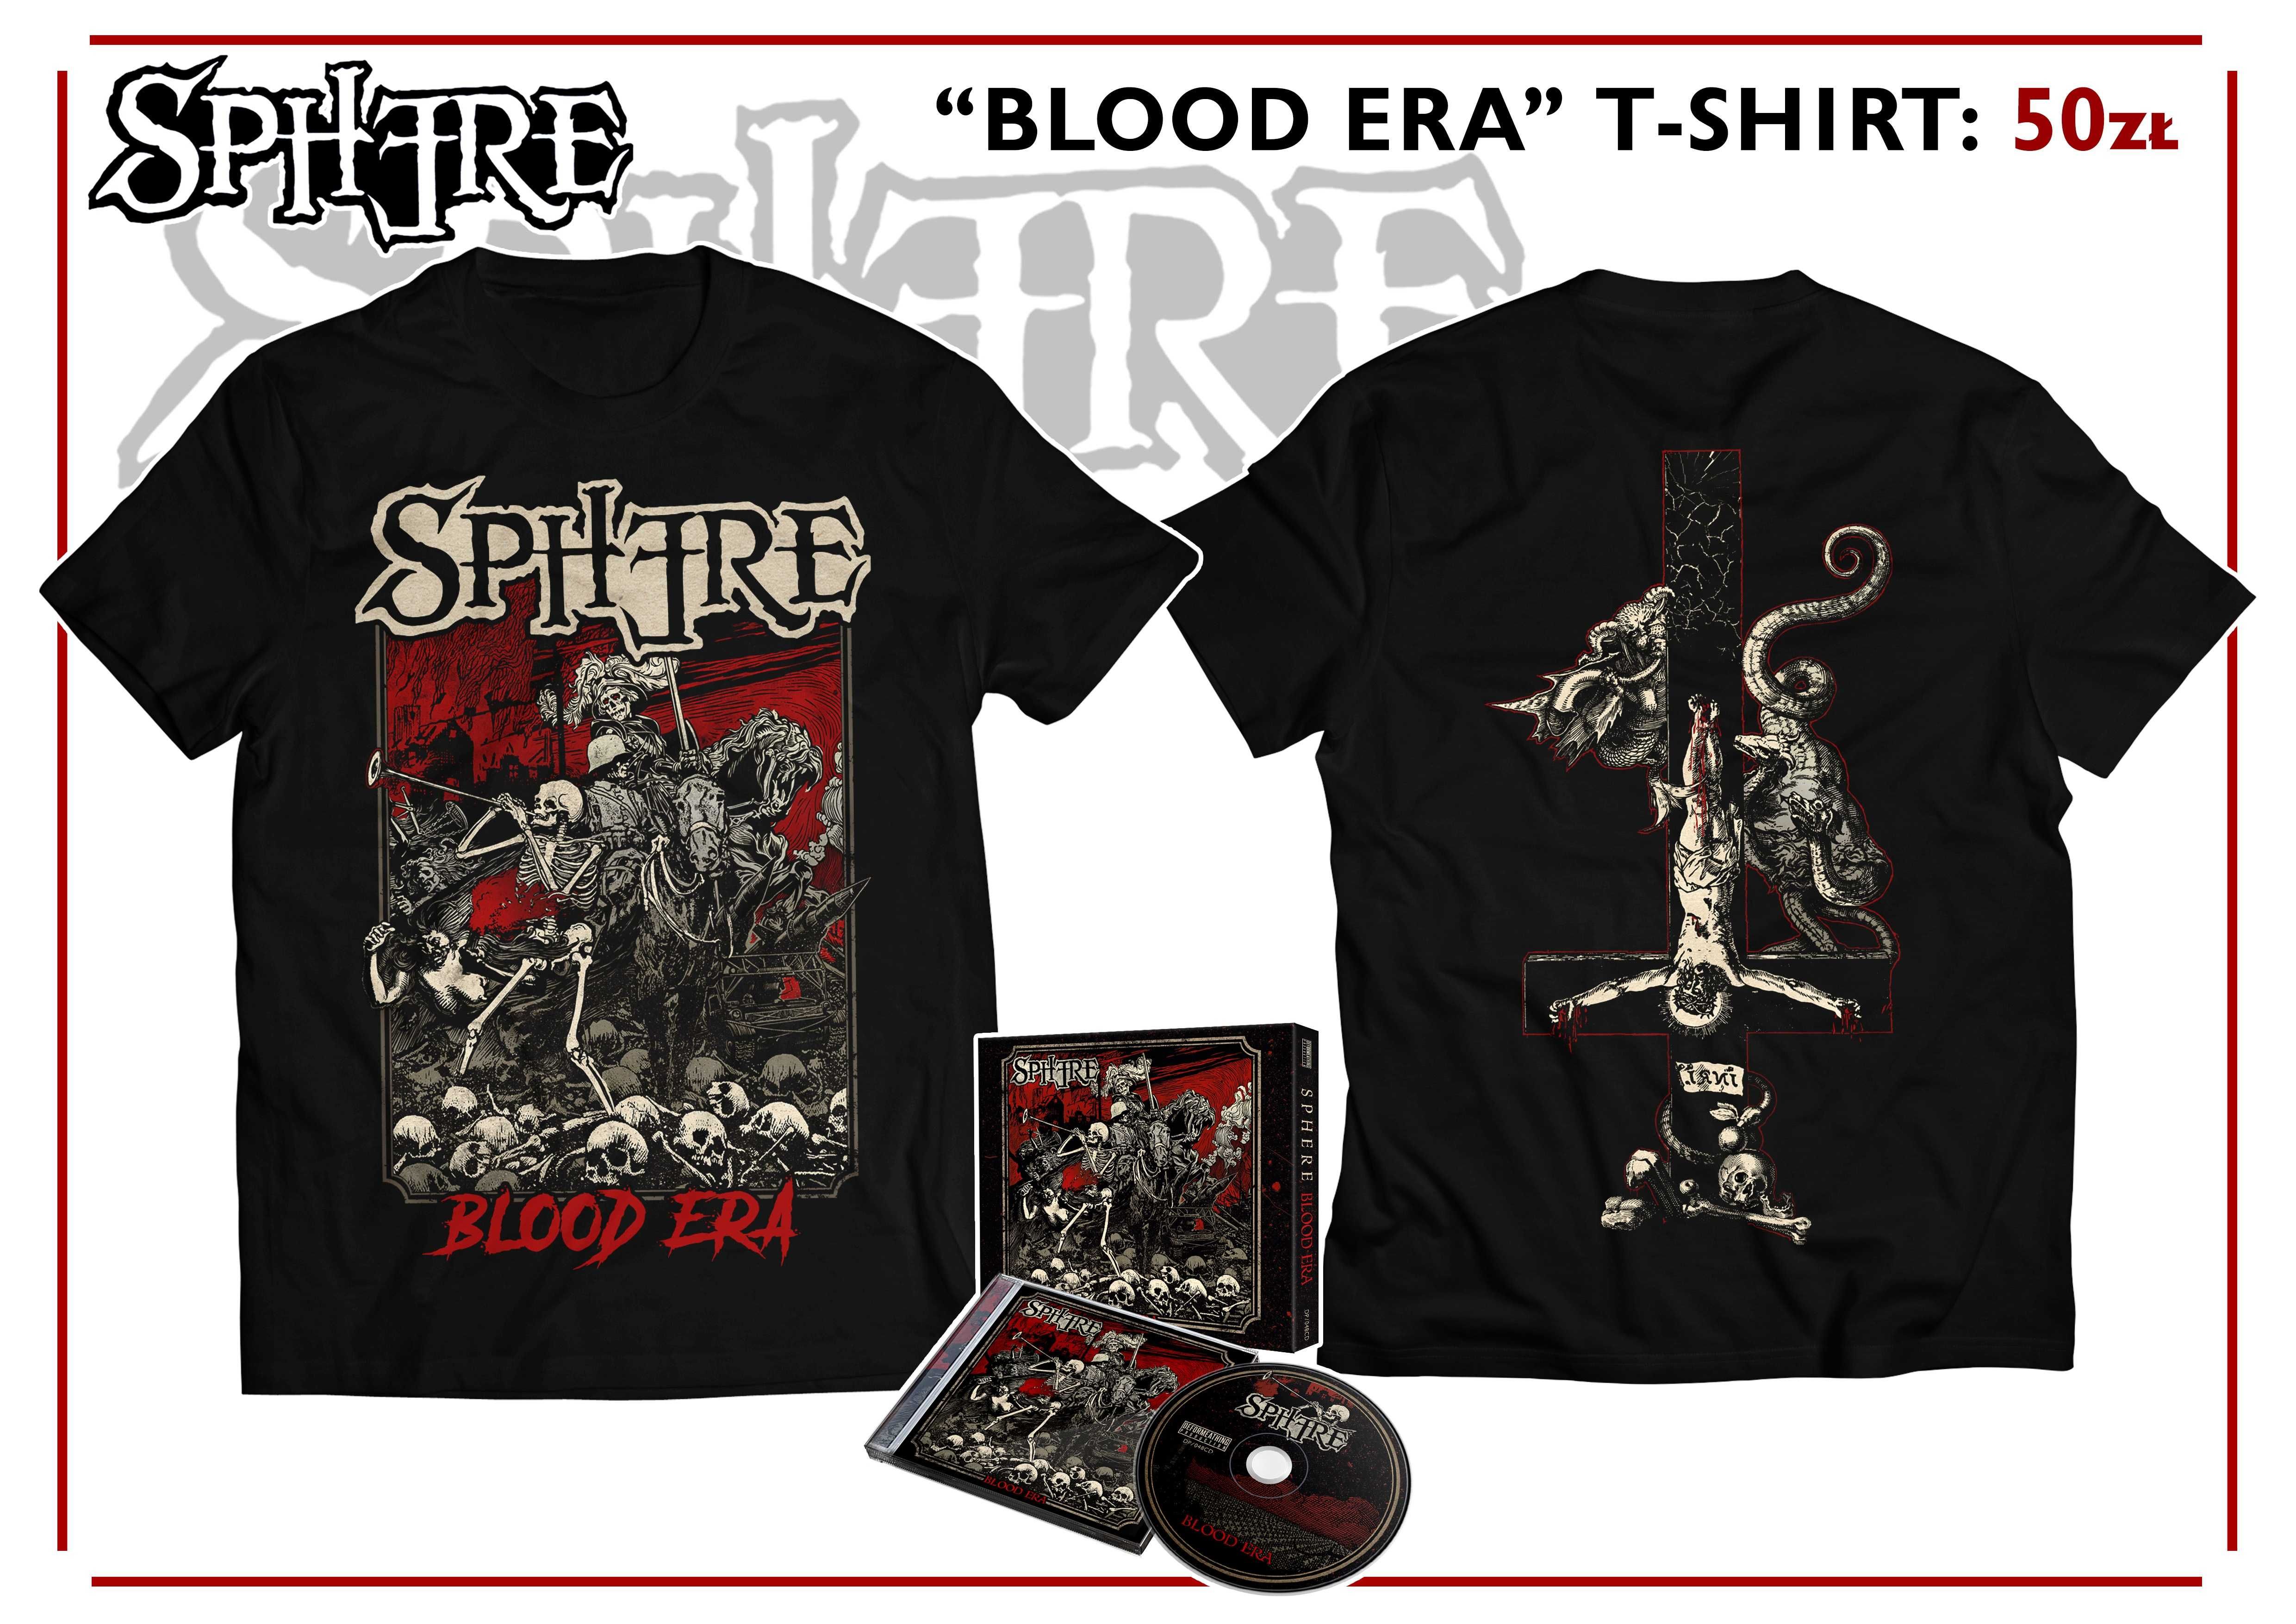 Sphere - Blood Era koszulka t-shirt S-XXL